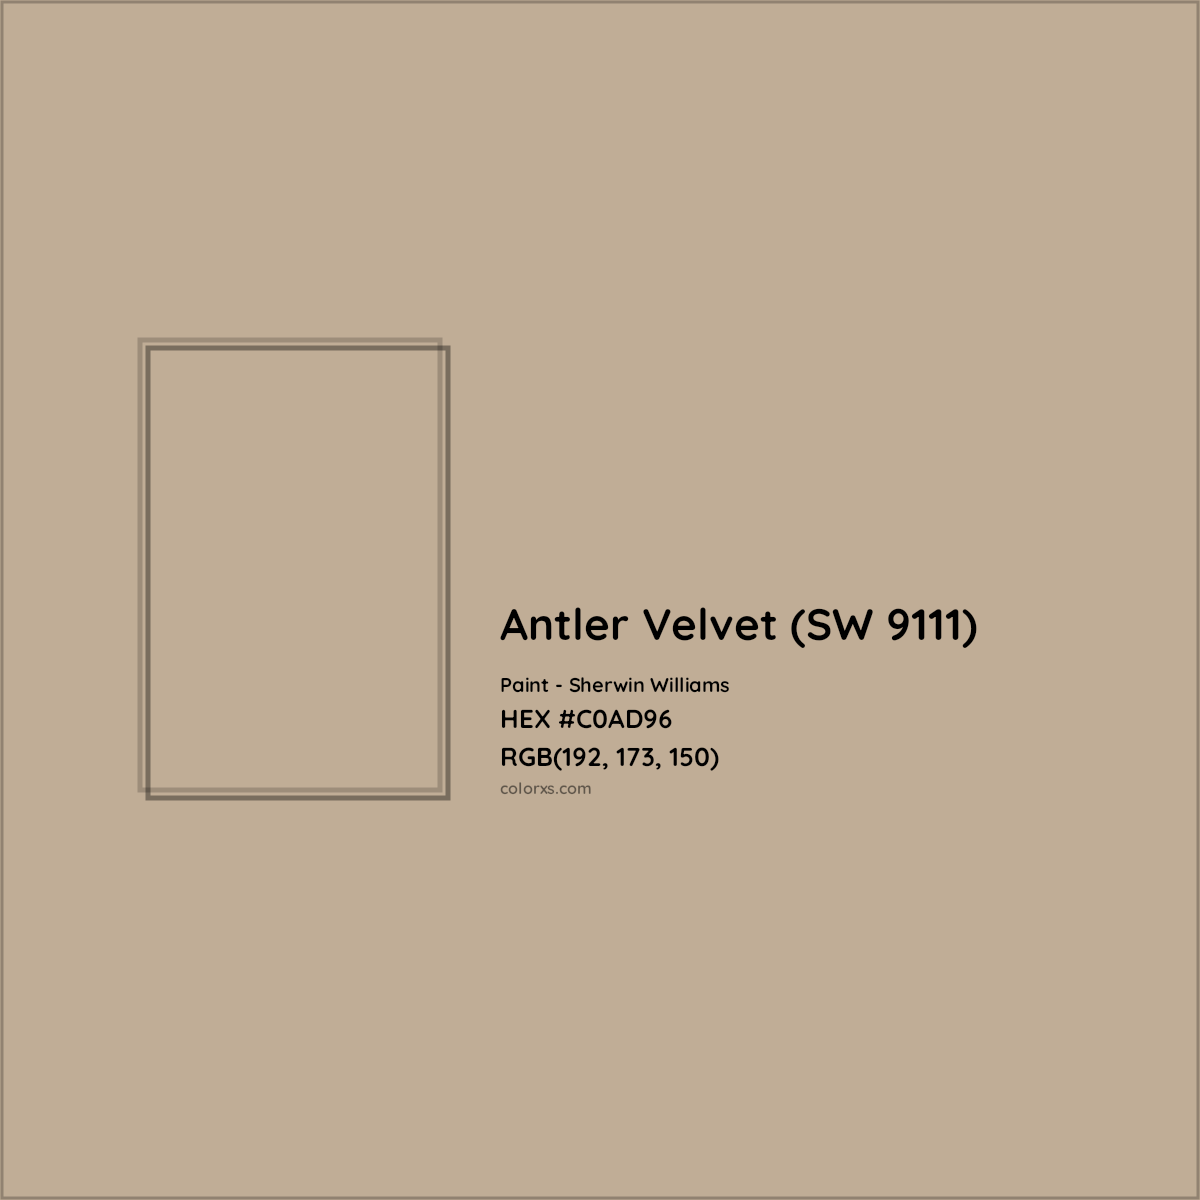 HEX #C0AD96 Antler Velvet (SW 9111) Paint Sherwin Williams - Color Code